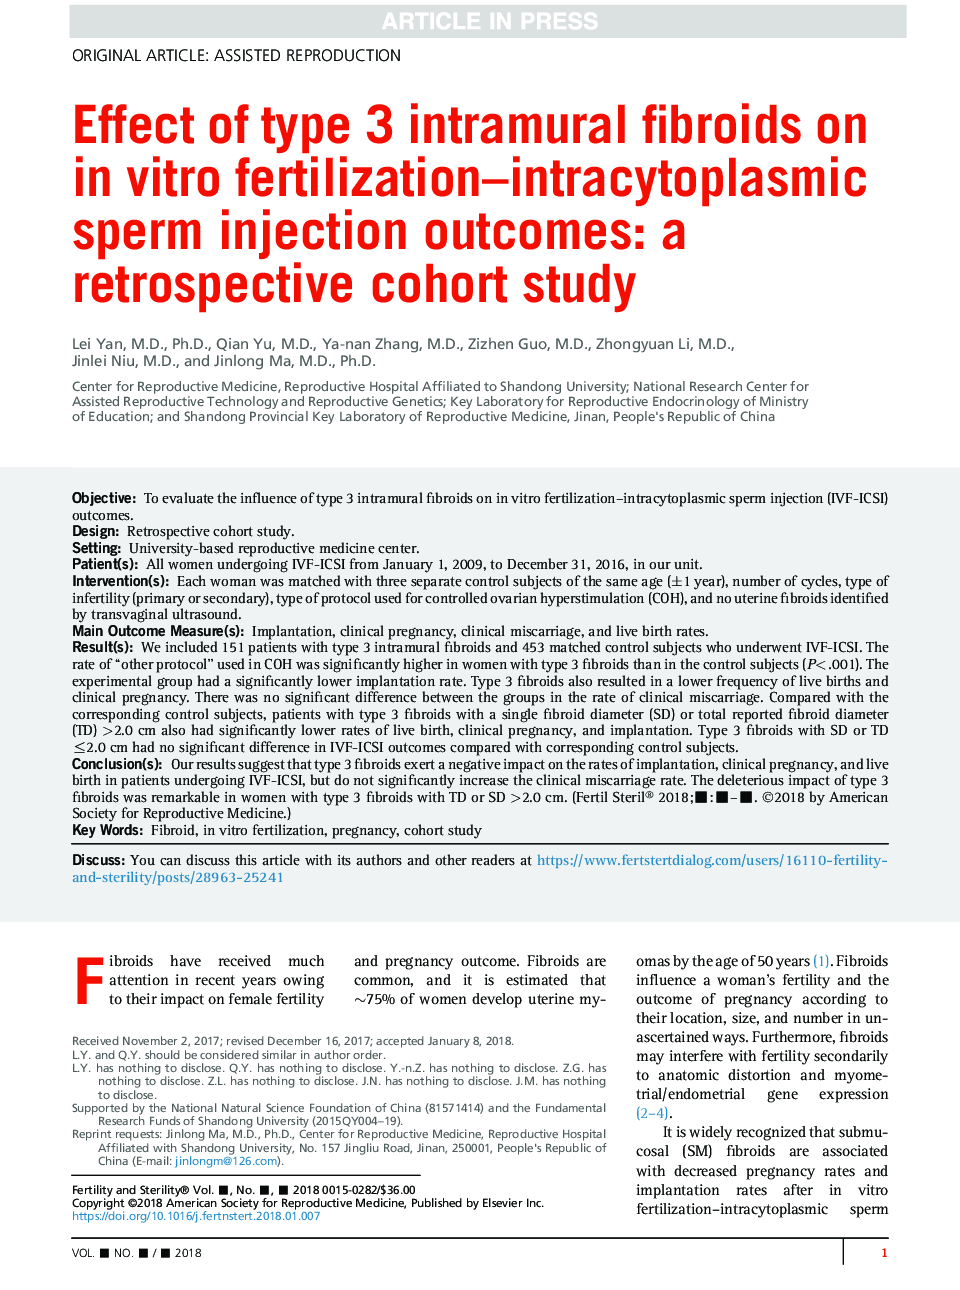 Effect of type 3 intramural fibroids on inÂ vitro fertilization-intracytoplasmic sperm injection outcomes: a retrospective cohort study